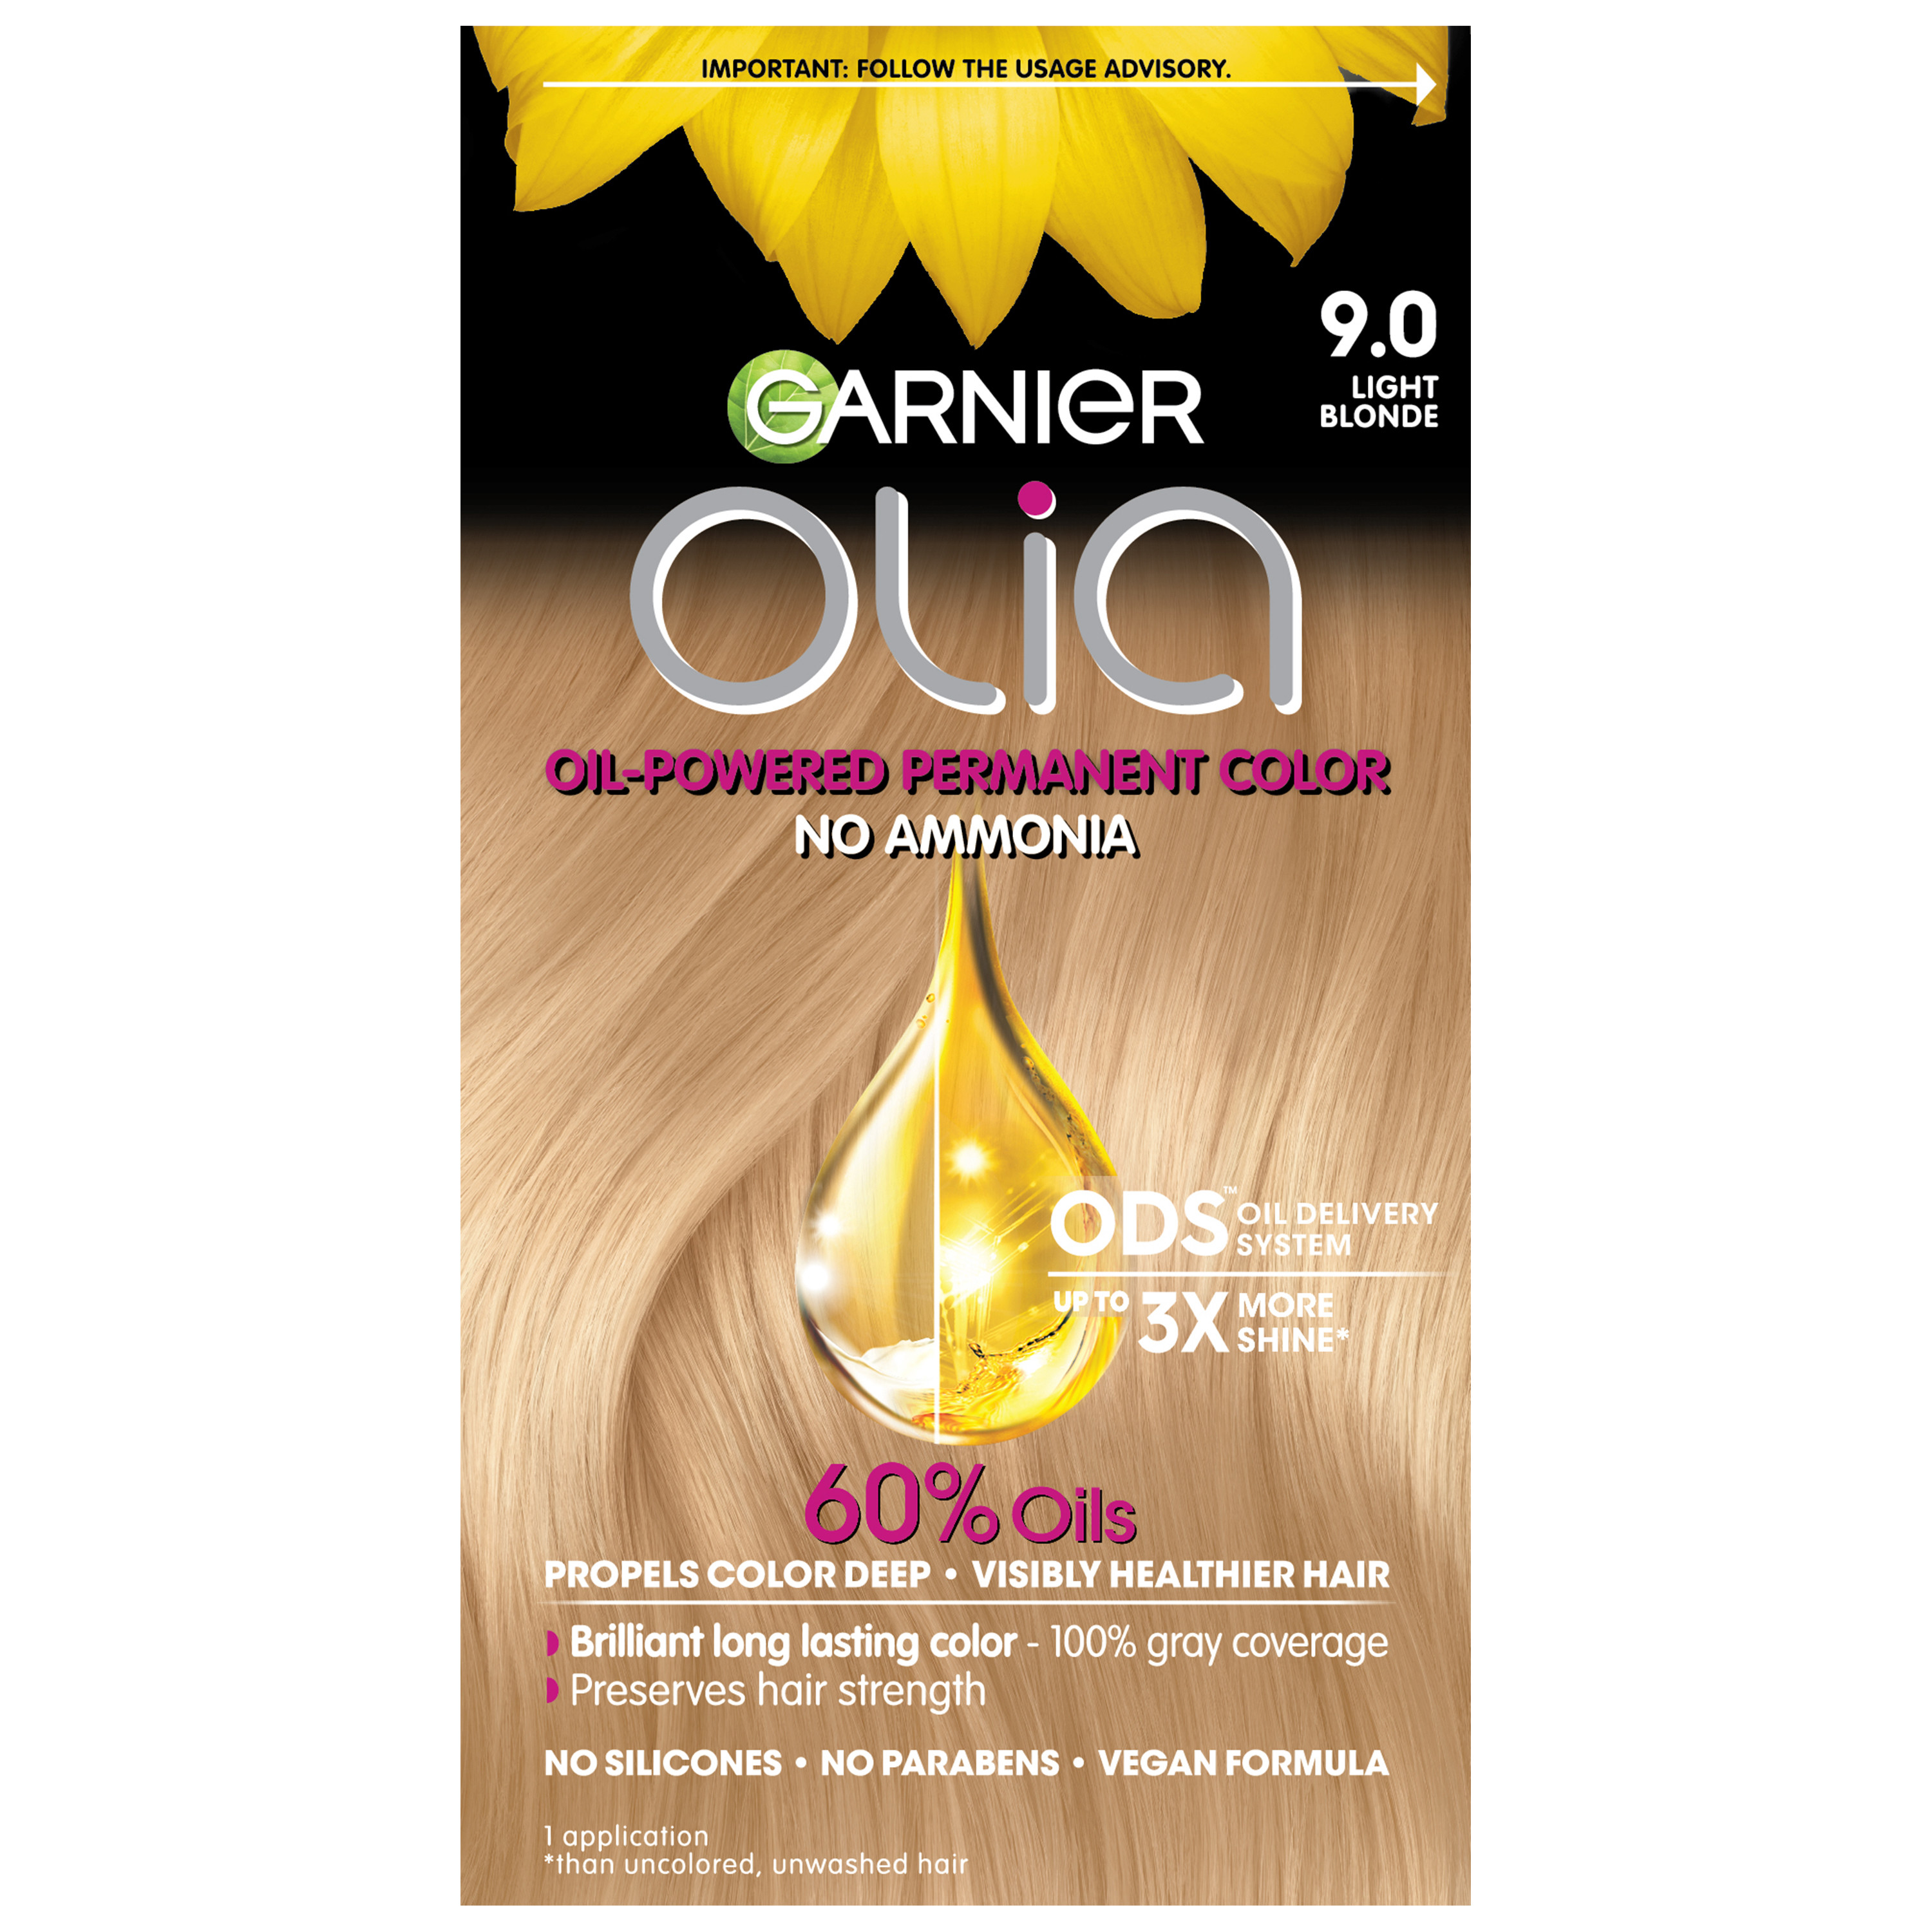 Garnier Olia Oil Powered Permanent Hair Color, 9.0 Light Blonde - image 1 of 9